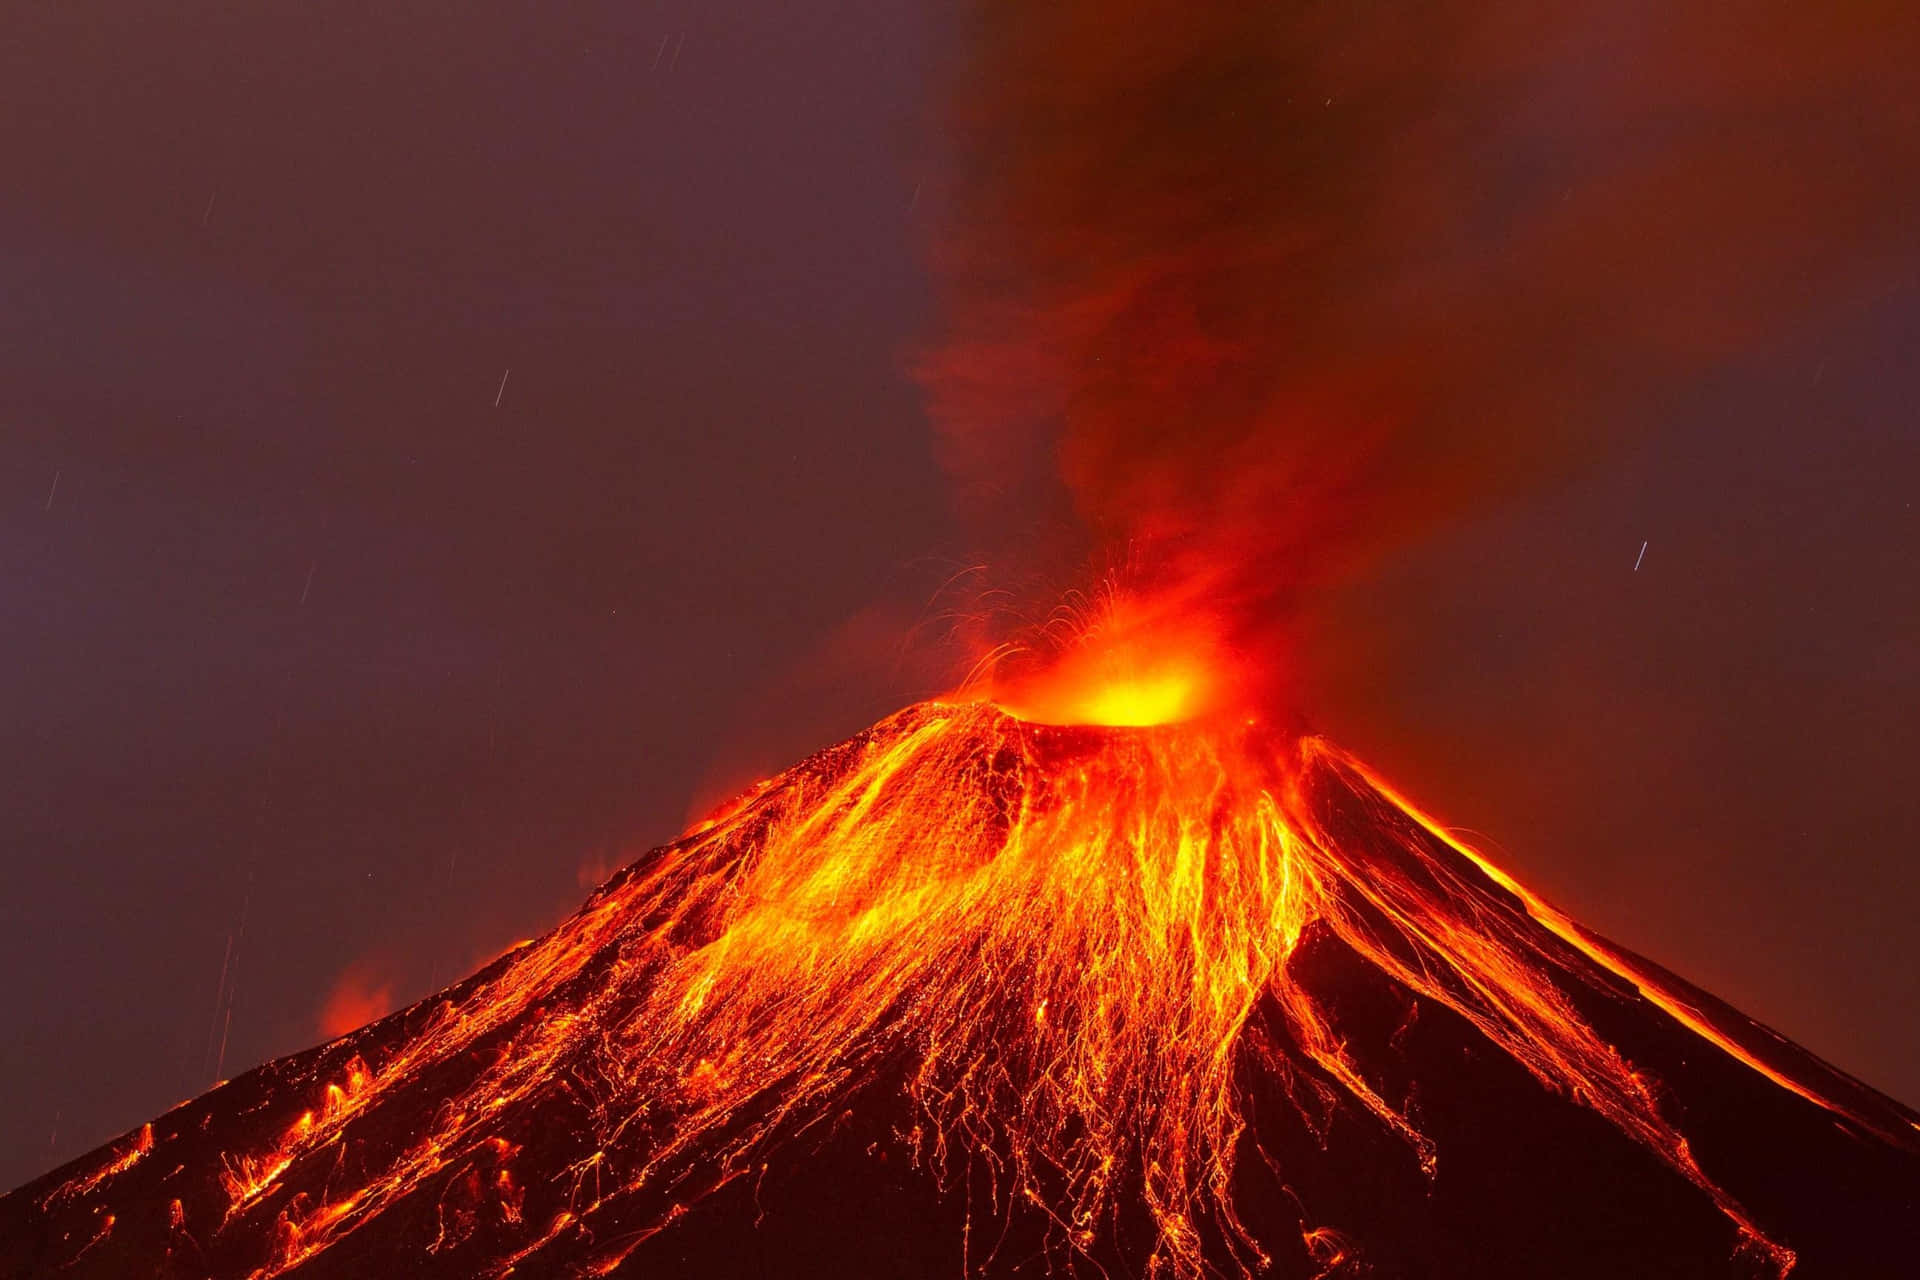 Awe-inspiring view of an active volcano